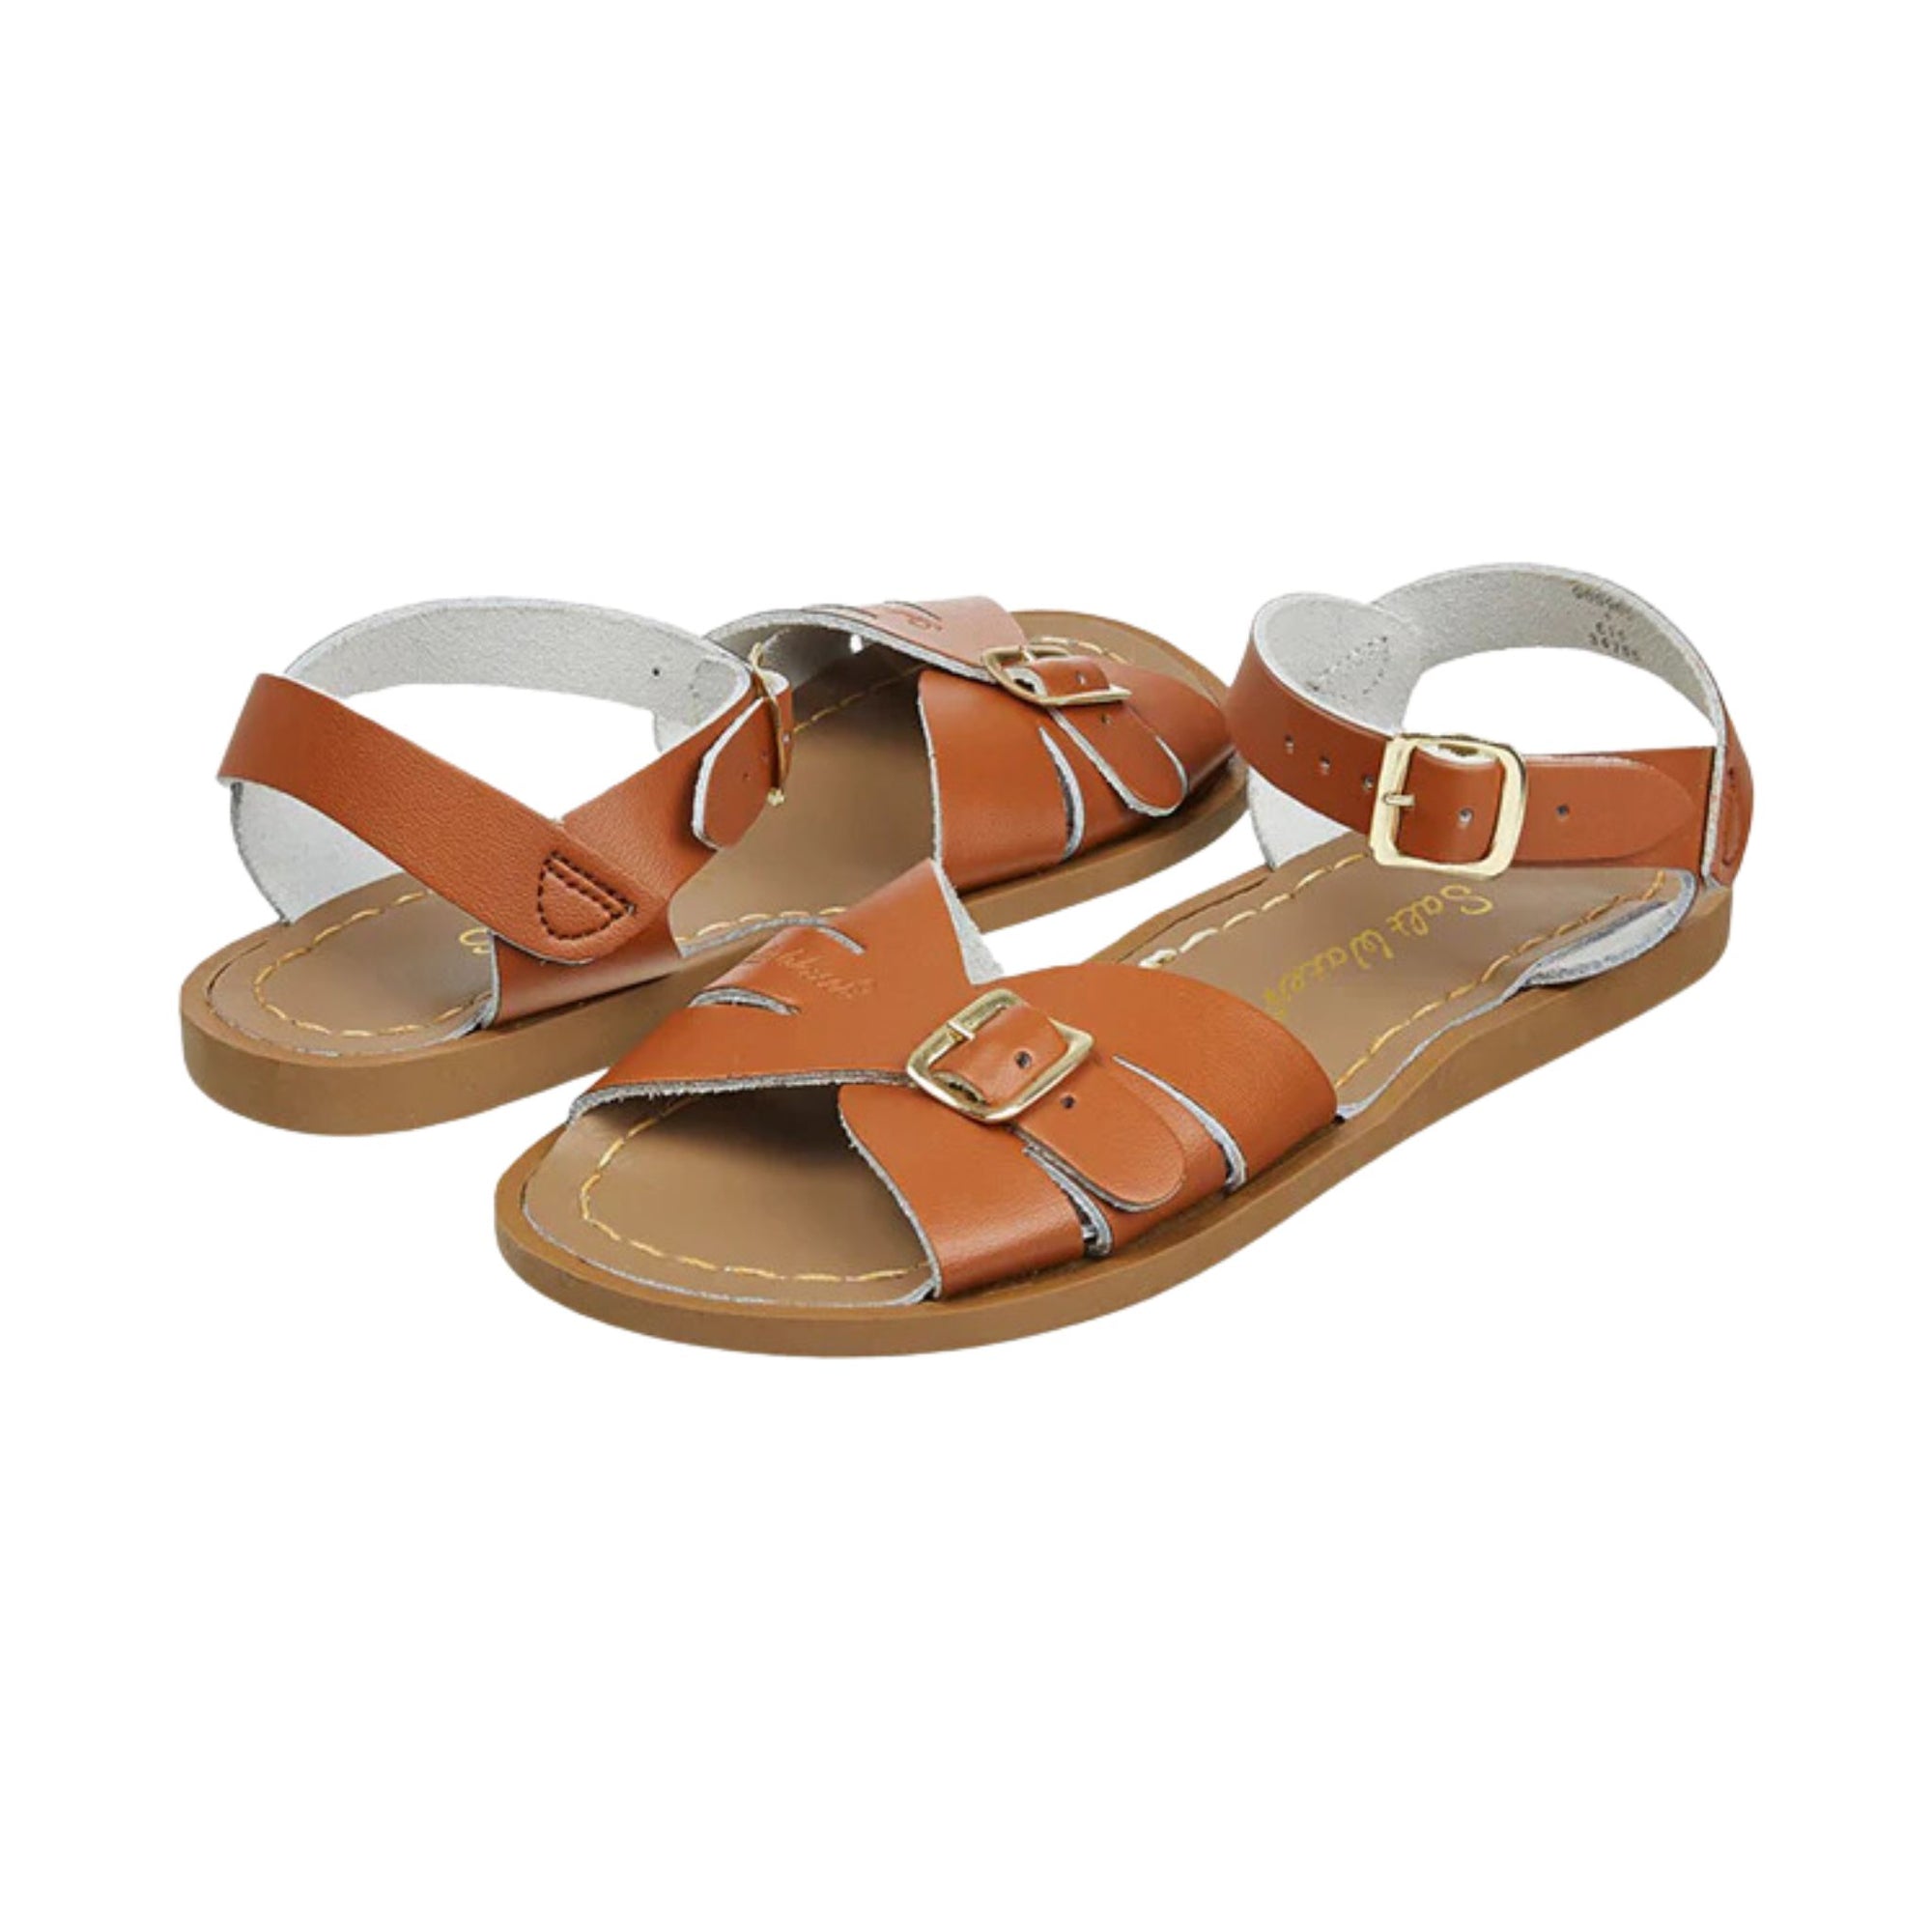 Salt-water Sandals Classic Adult - Tan